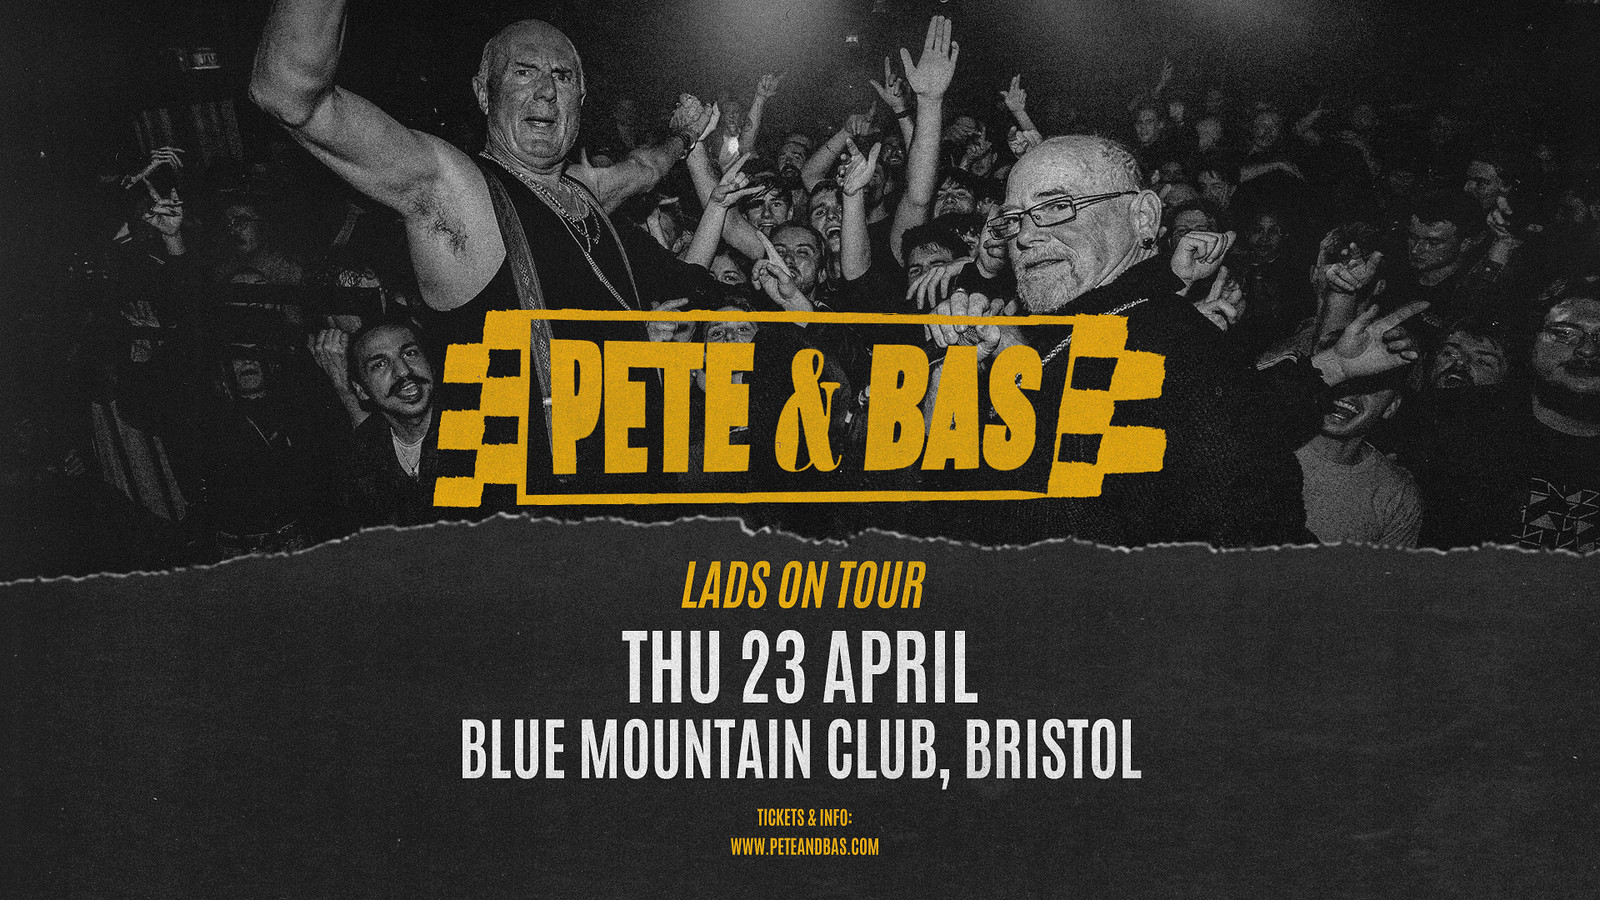 Pete&Bas Lads on Tour Bristol show at Blue Mountain